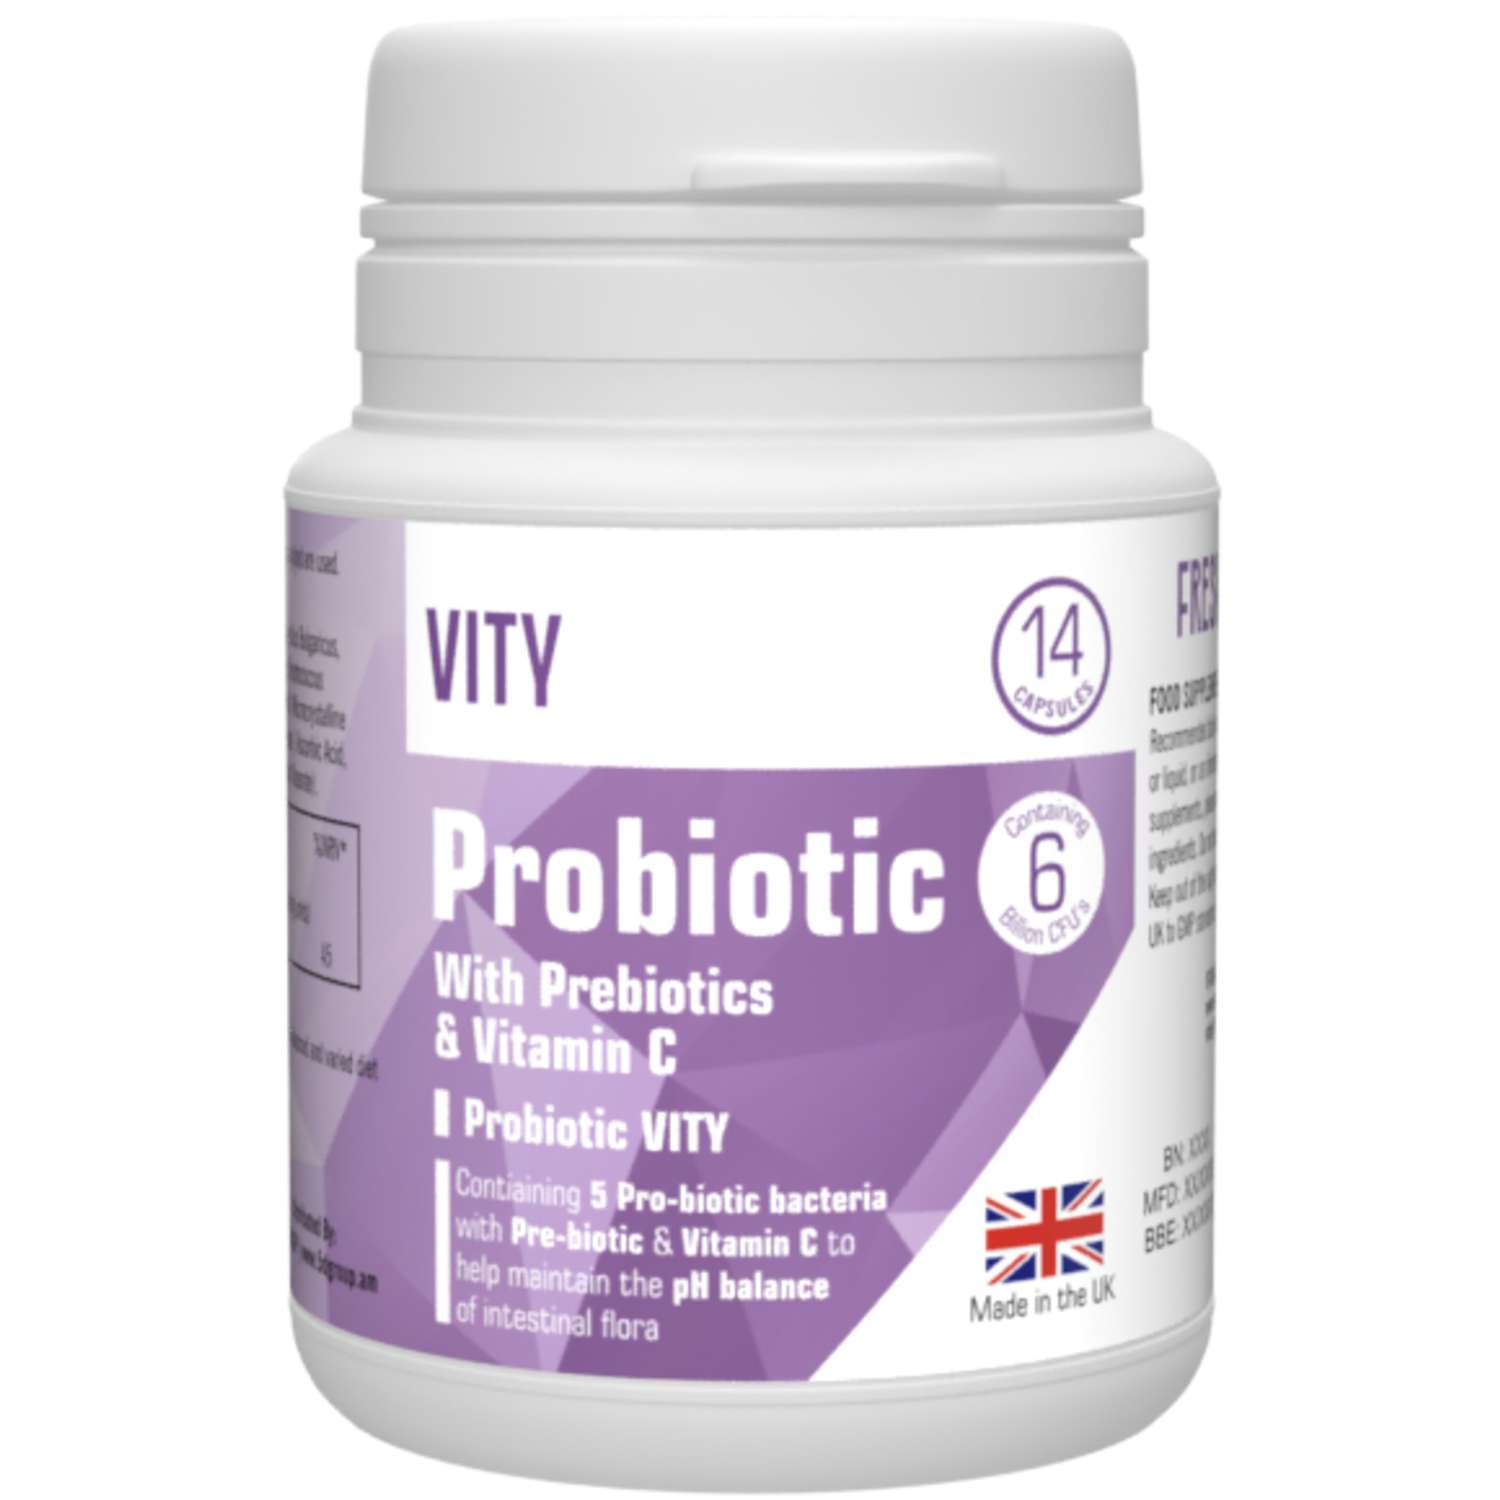 БАД VITY пробиотик с пребиотиком и витамином С 36мг 14 капсул Великобритания - фото 1